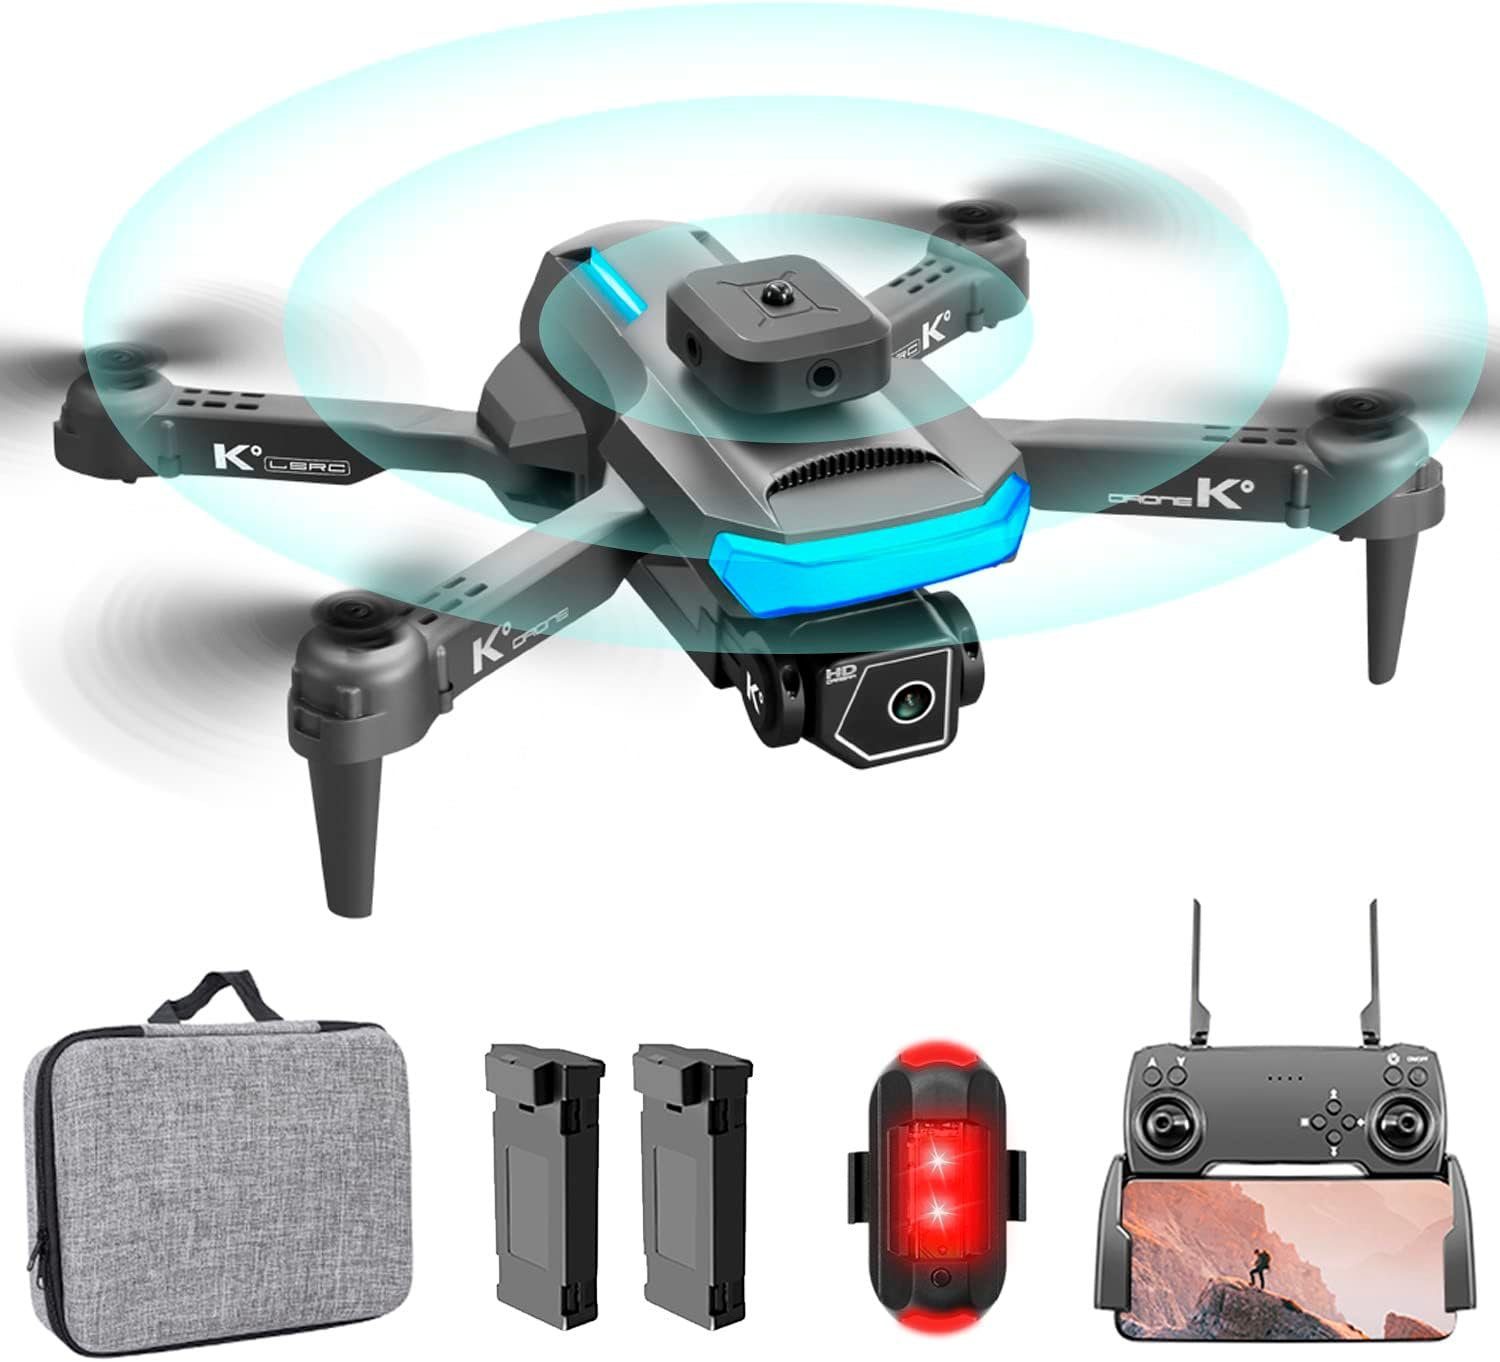 Super günstig & neu! OBEST Drohne (4k, Drohne Quadcopter FPV Live RC Kamera 4K mit Übertragung) mit